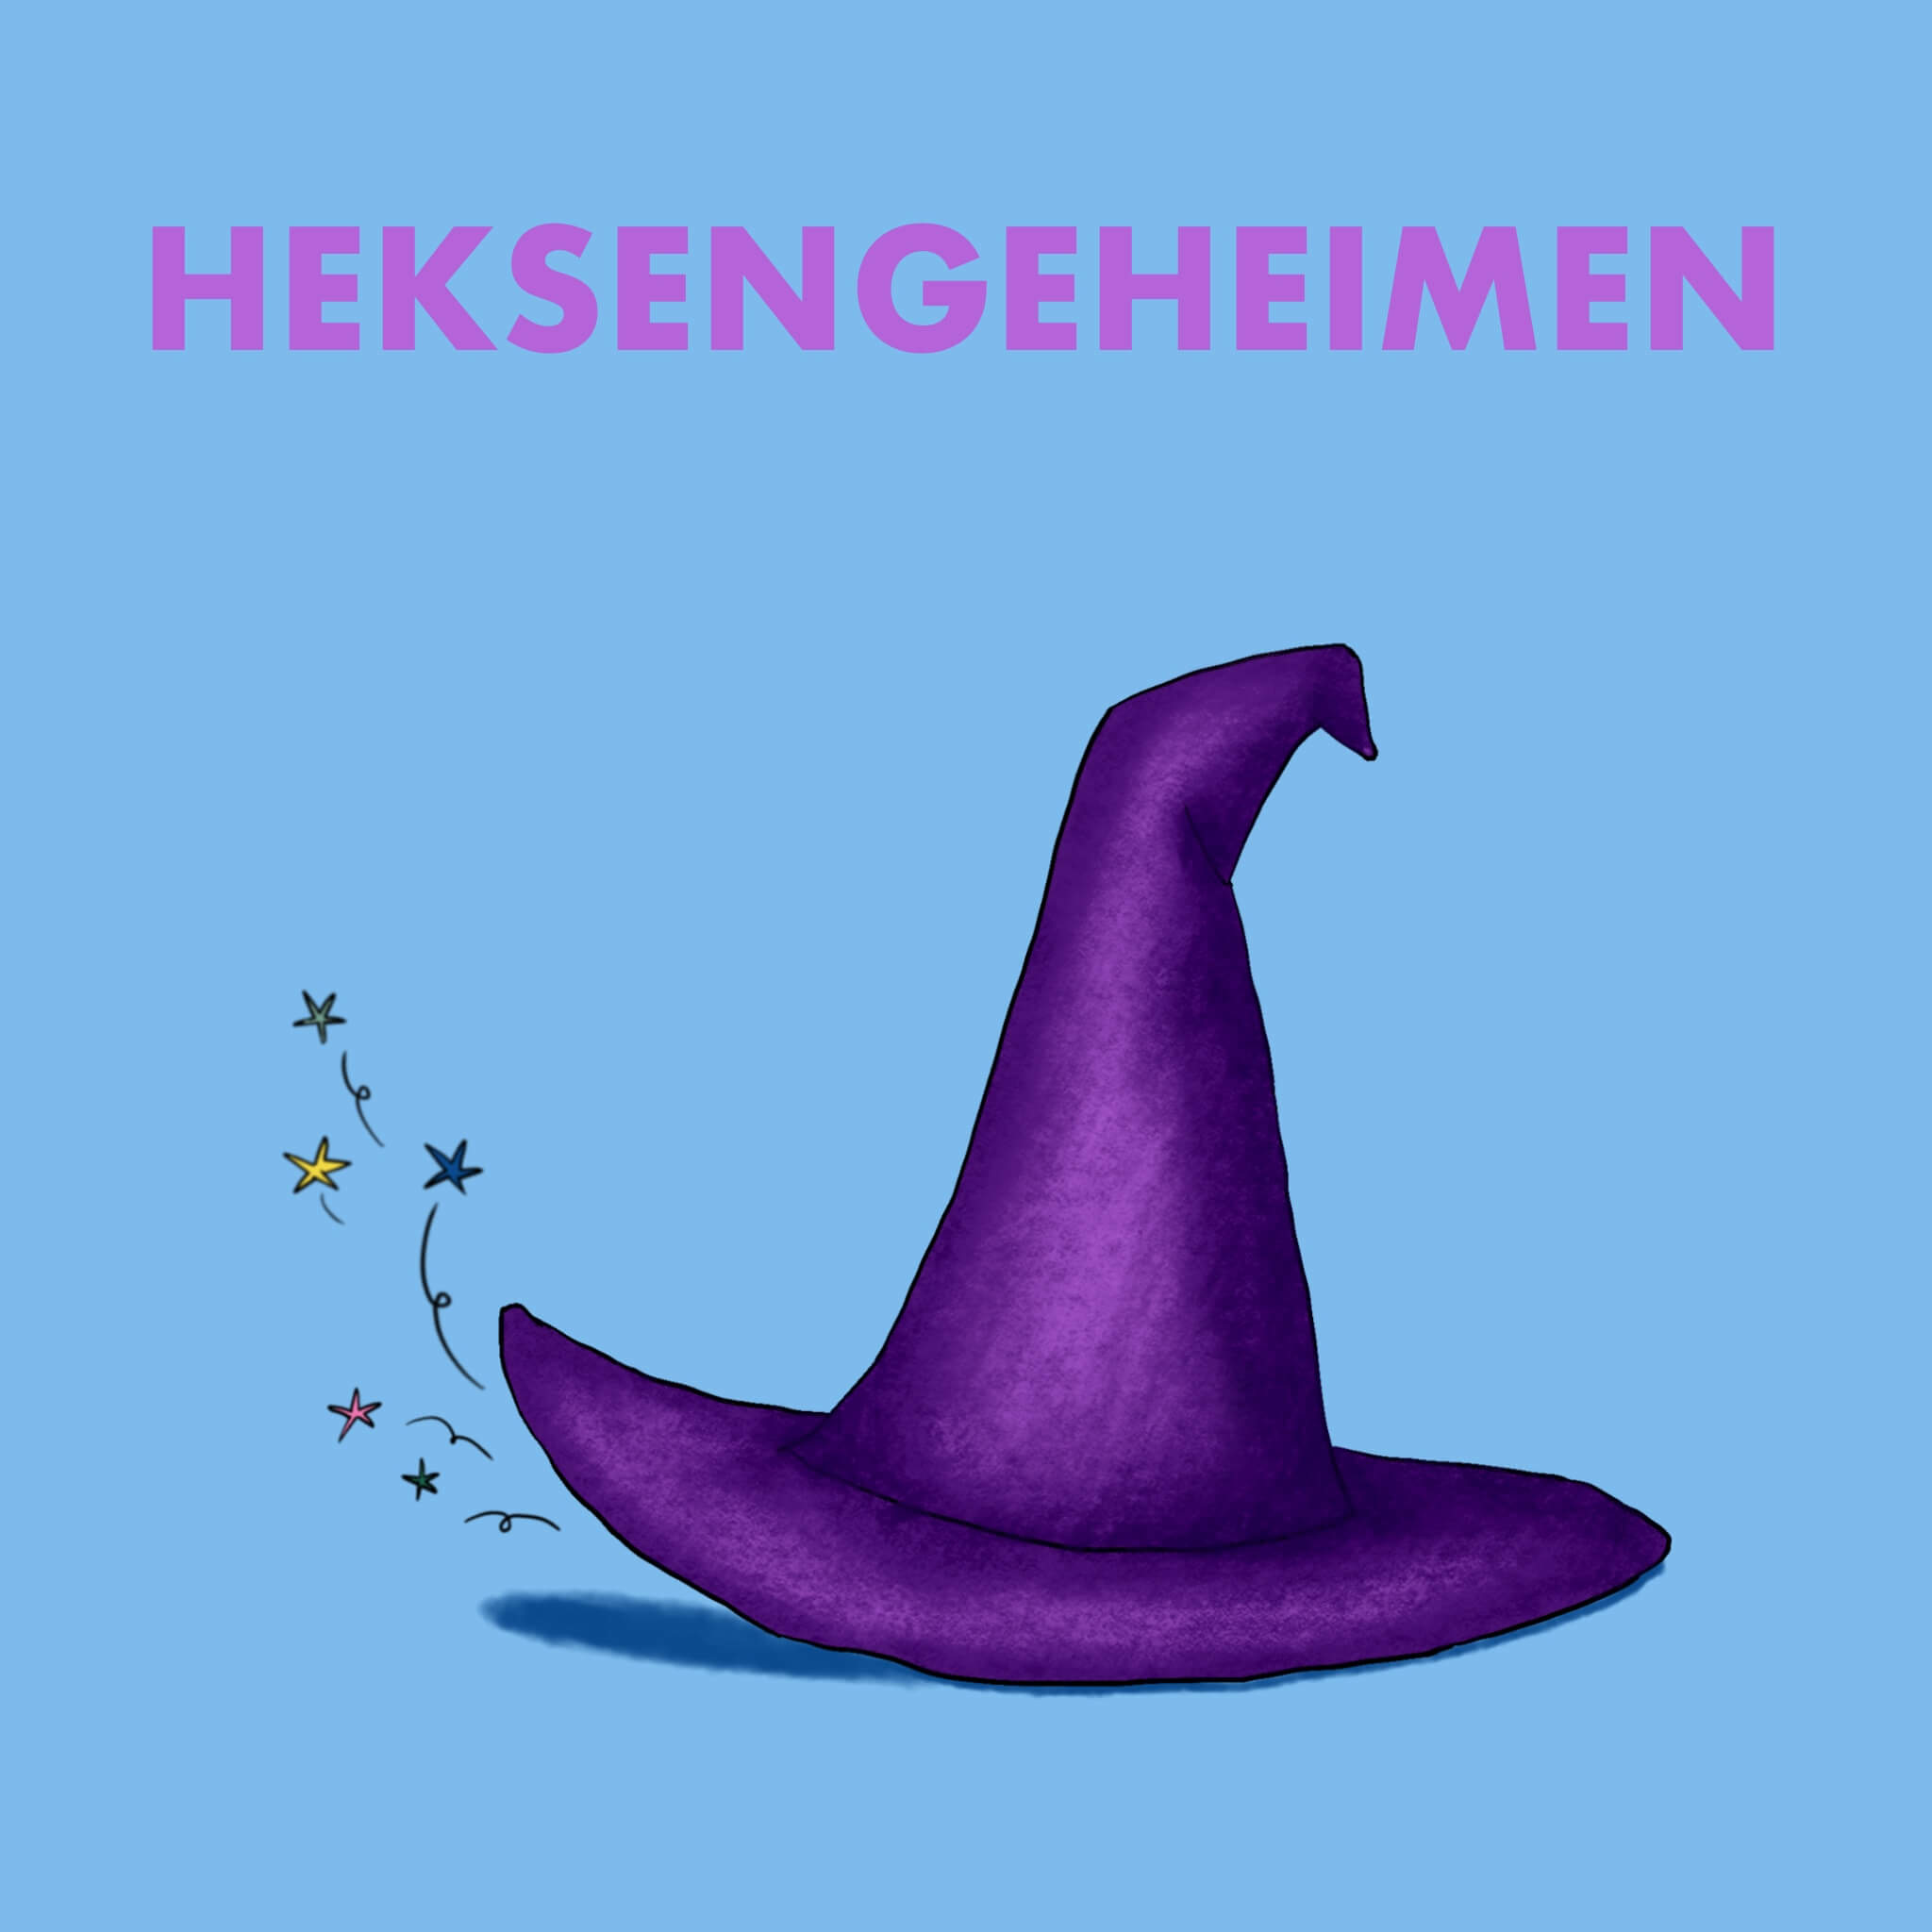 Heksengeheim